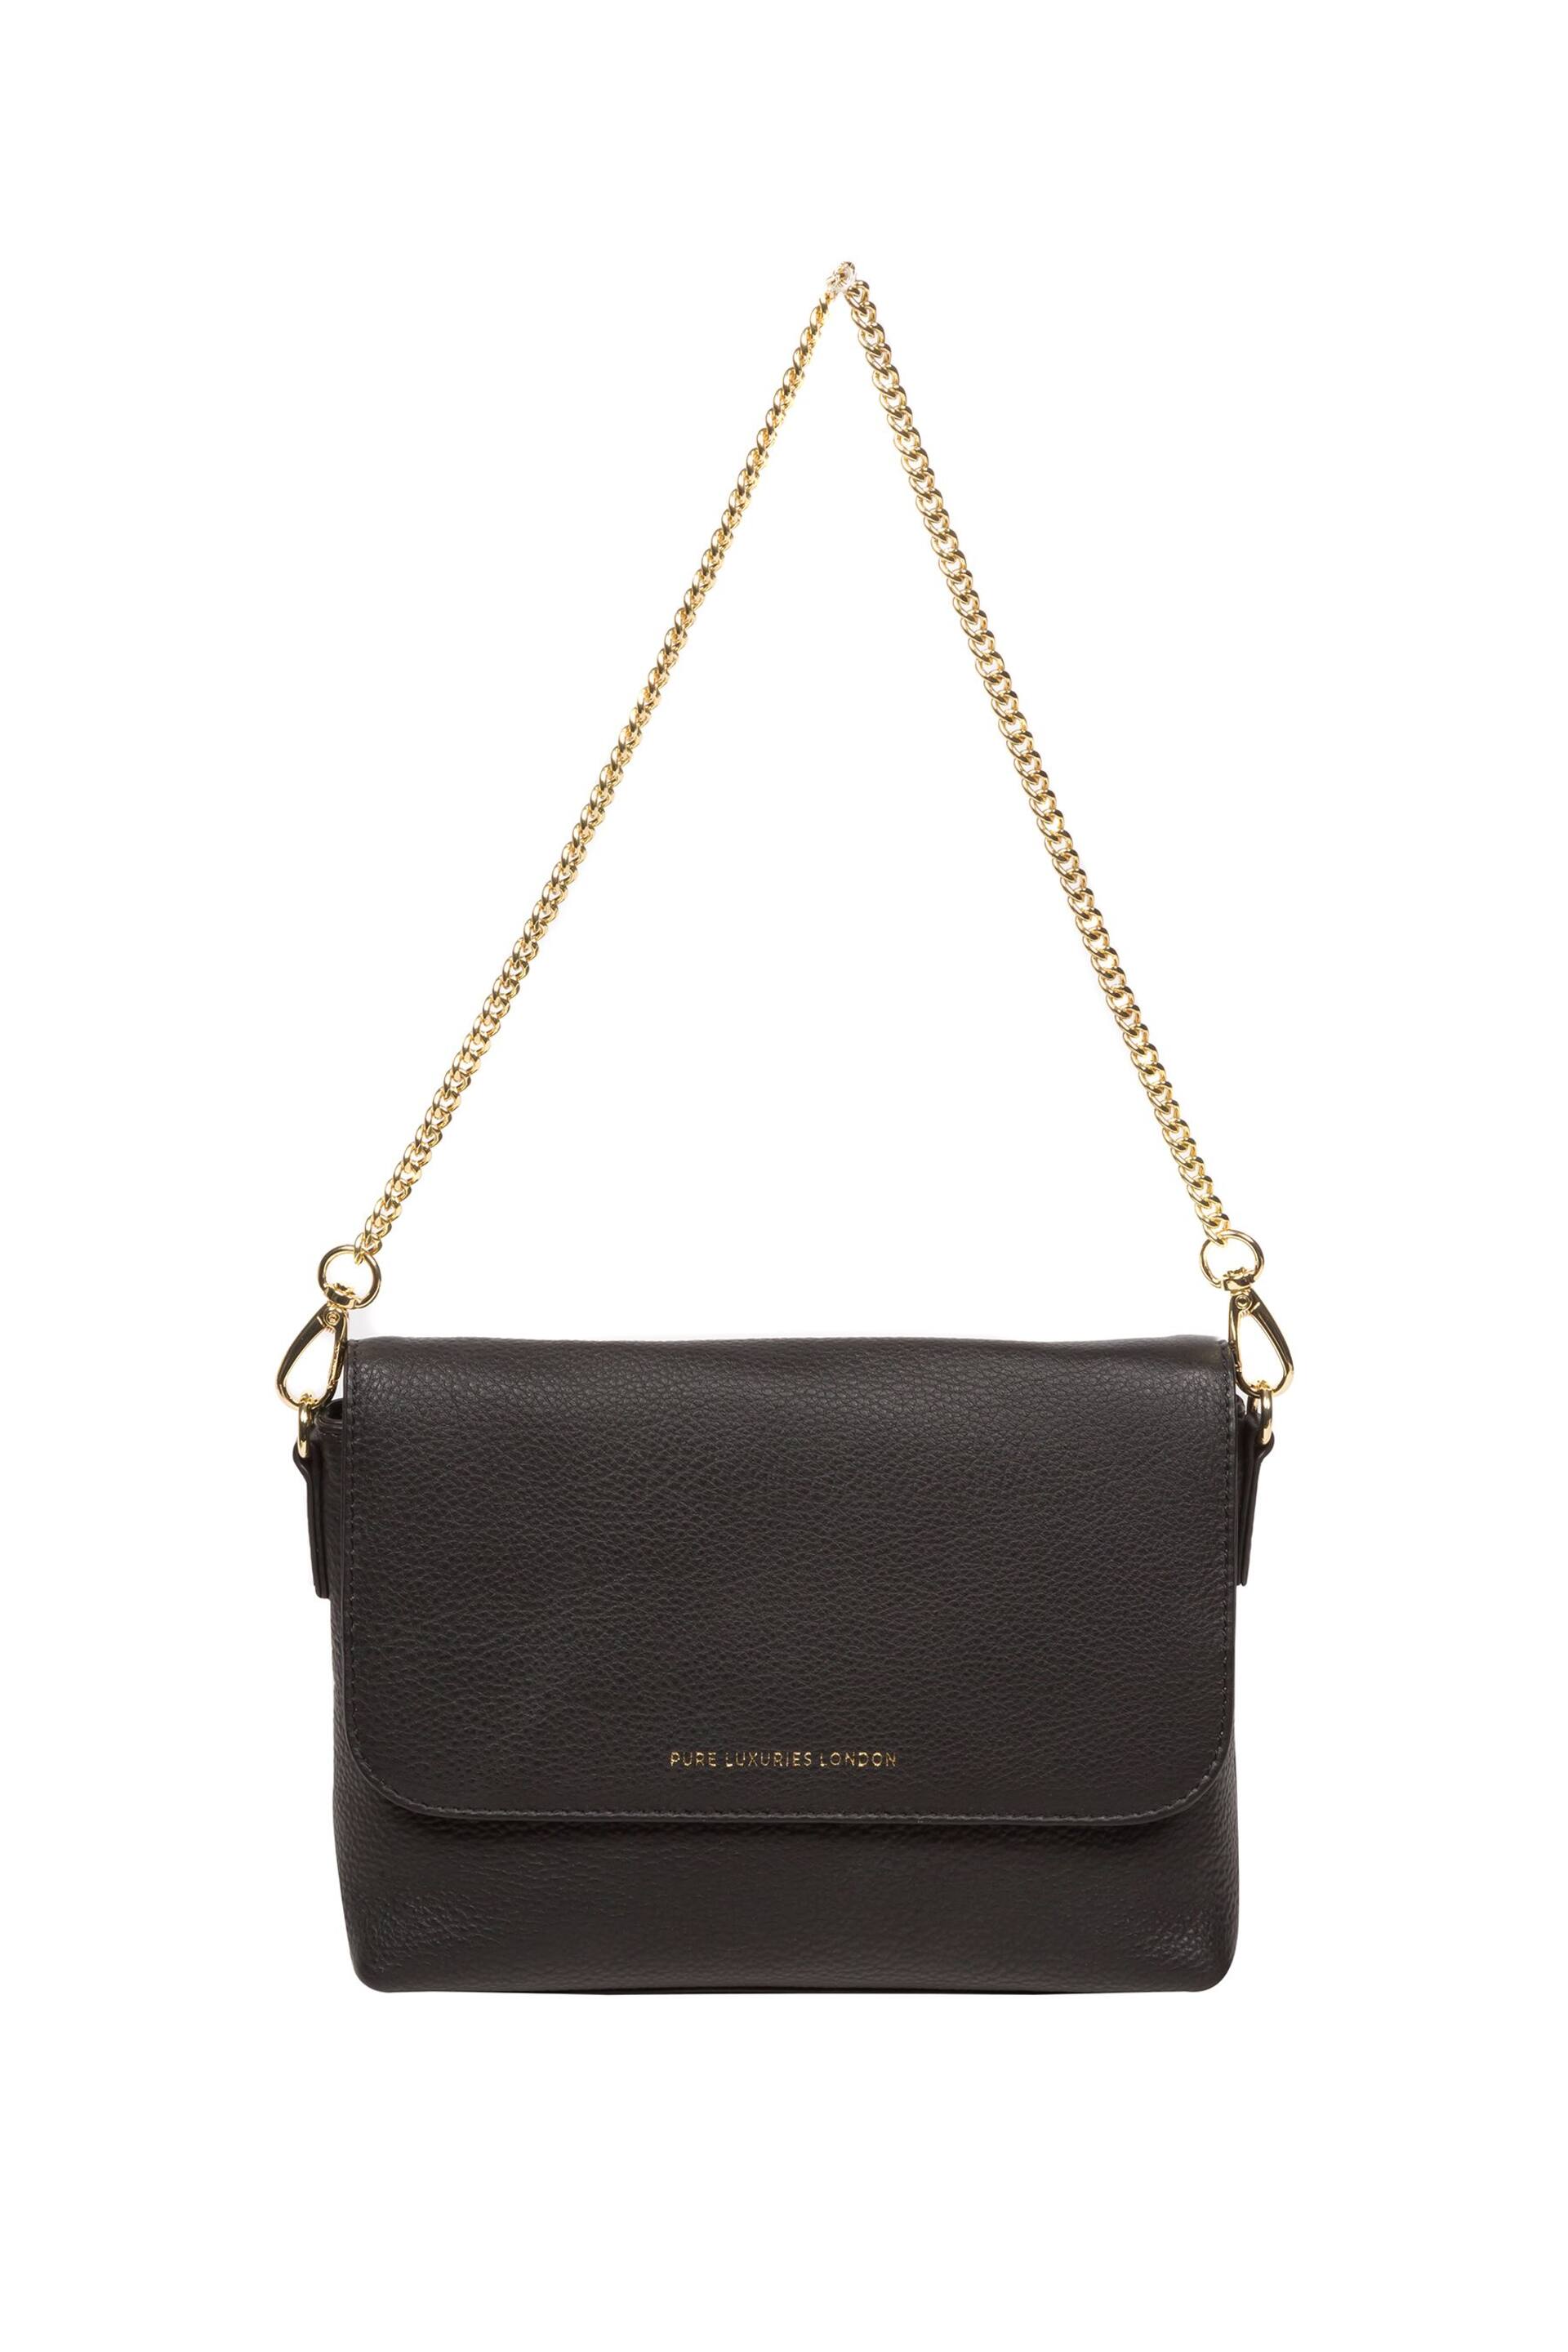 Pure Luxuries London Jazmine Nappa Leather Grab Clutch Bag - Image 2 of 8